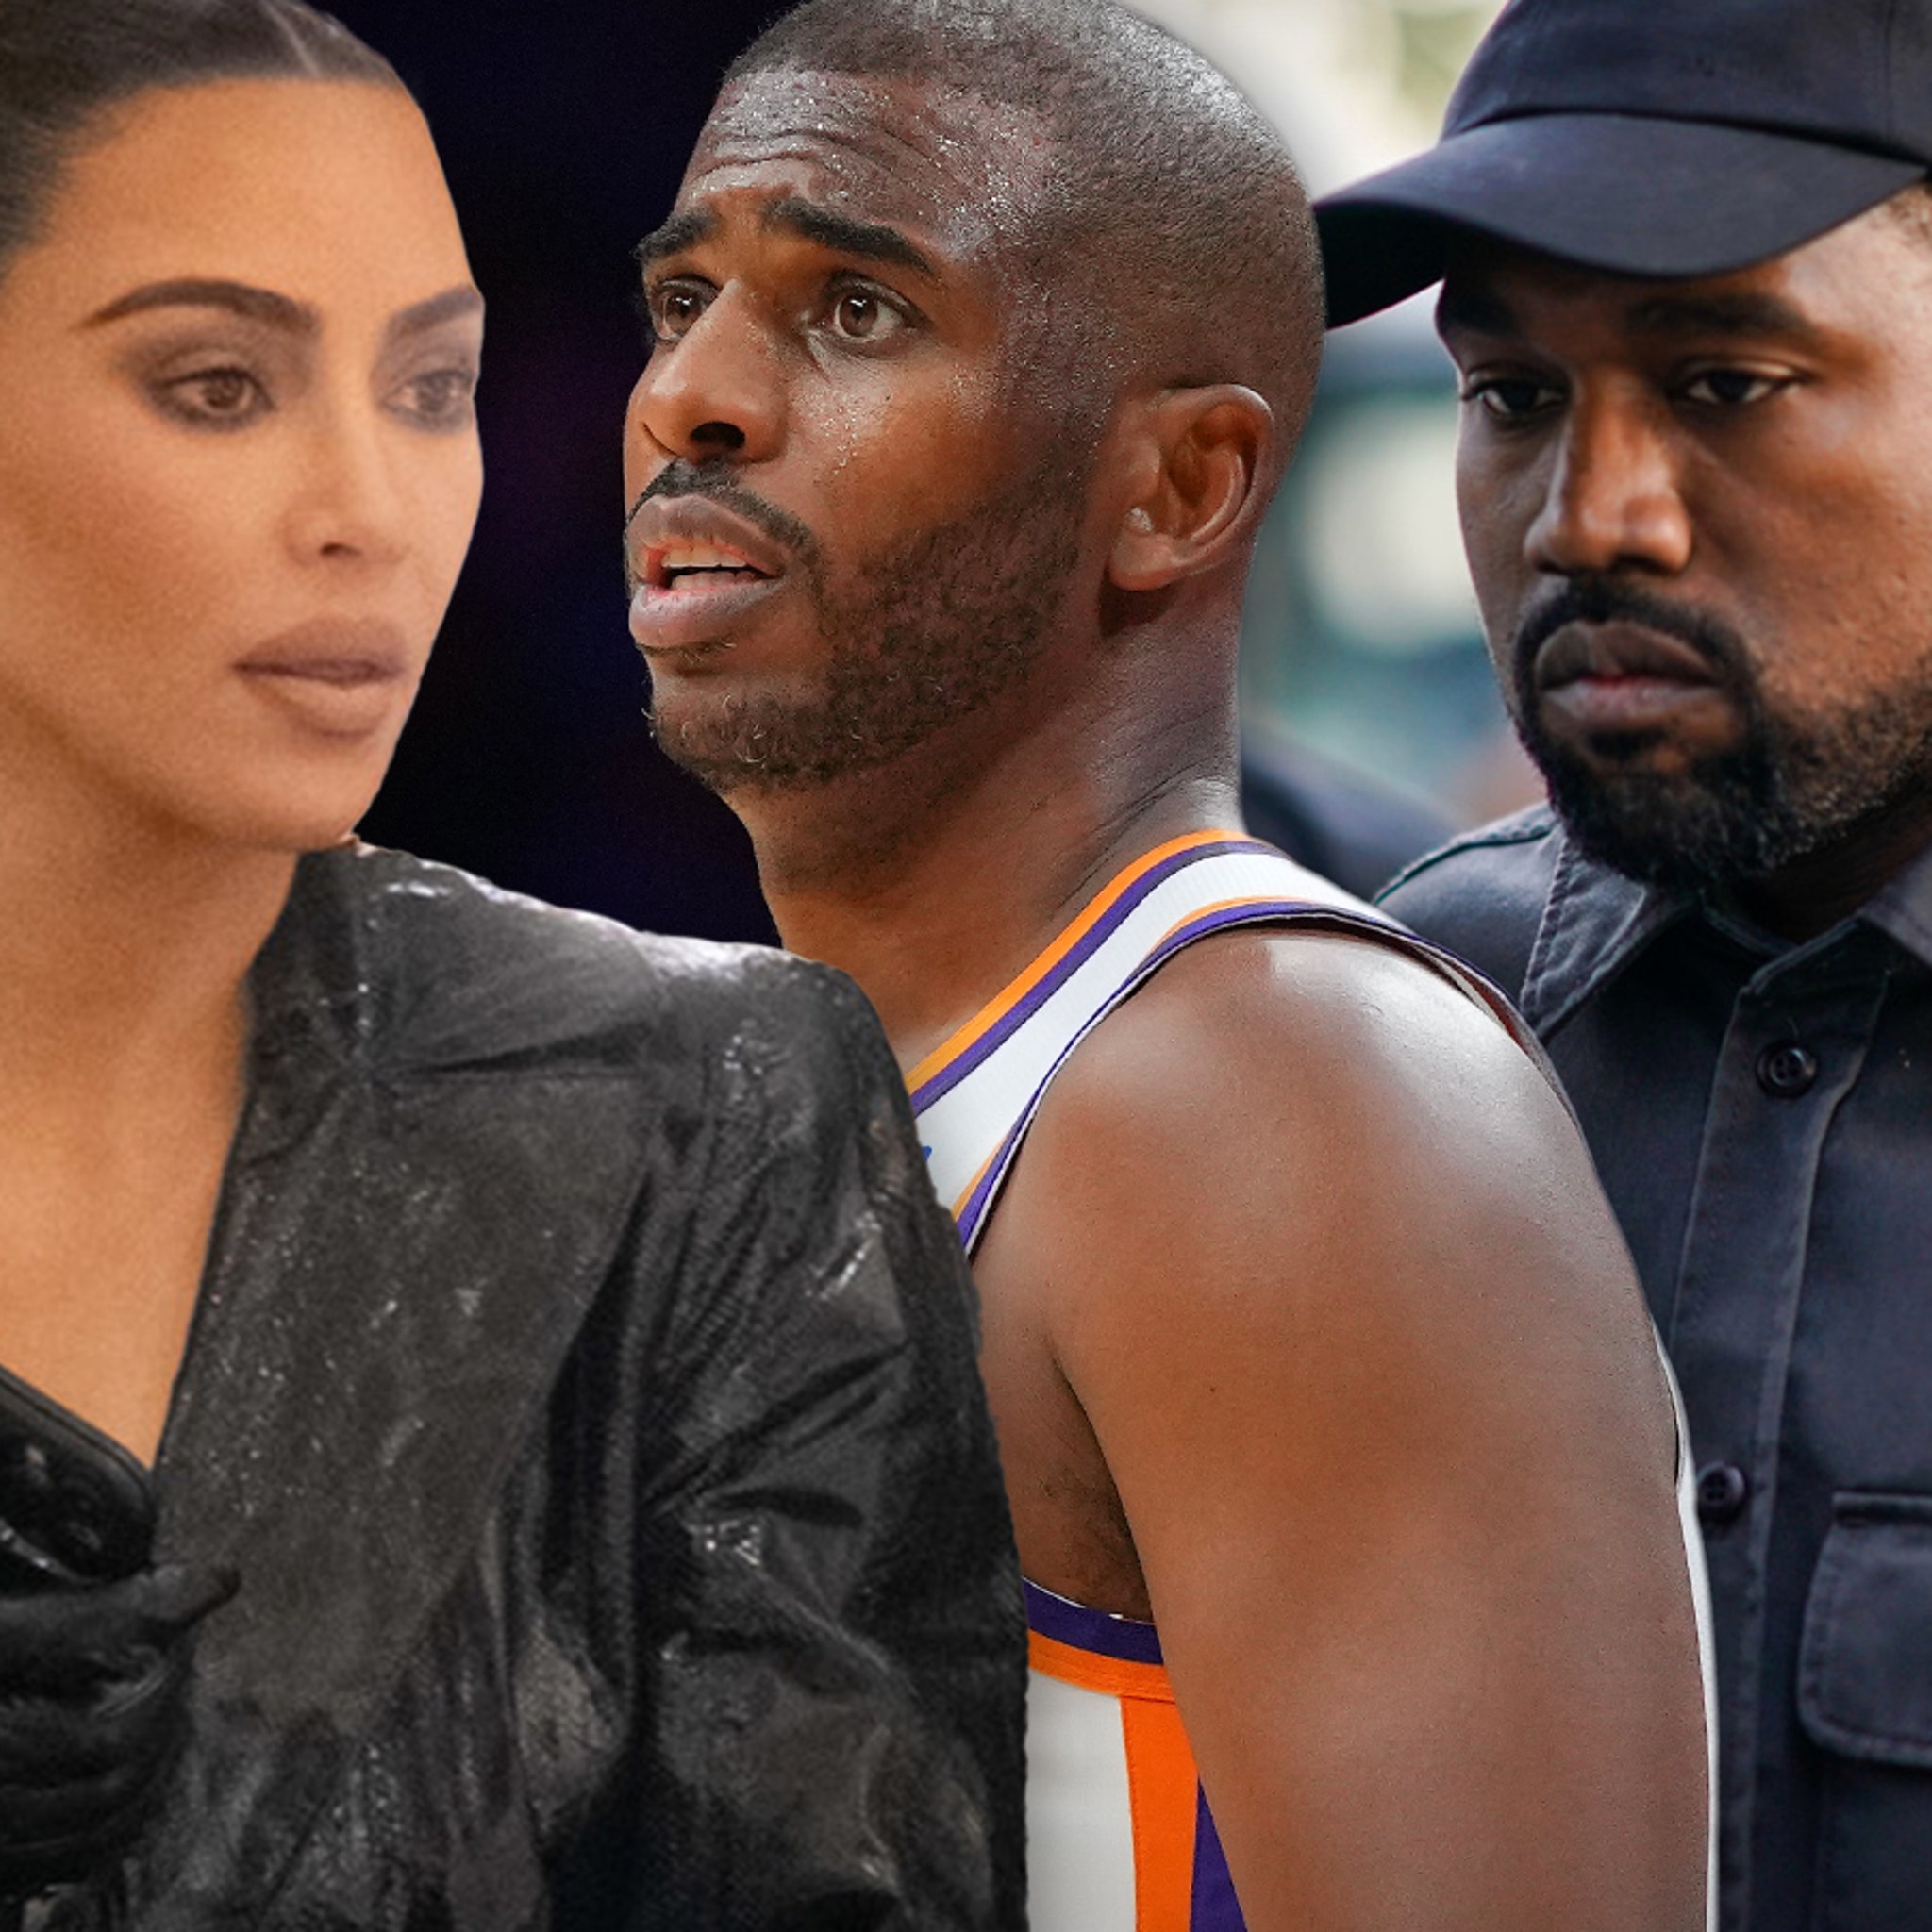 Kim Kardashian Porn Star - Kim Kardashian Did Not Cheat on Kanye West with Chris Paul, Sources